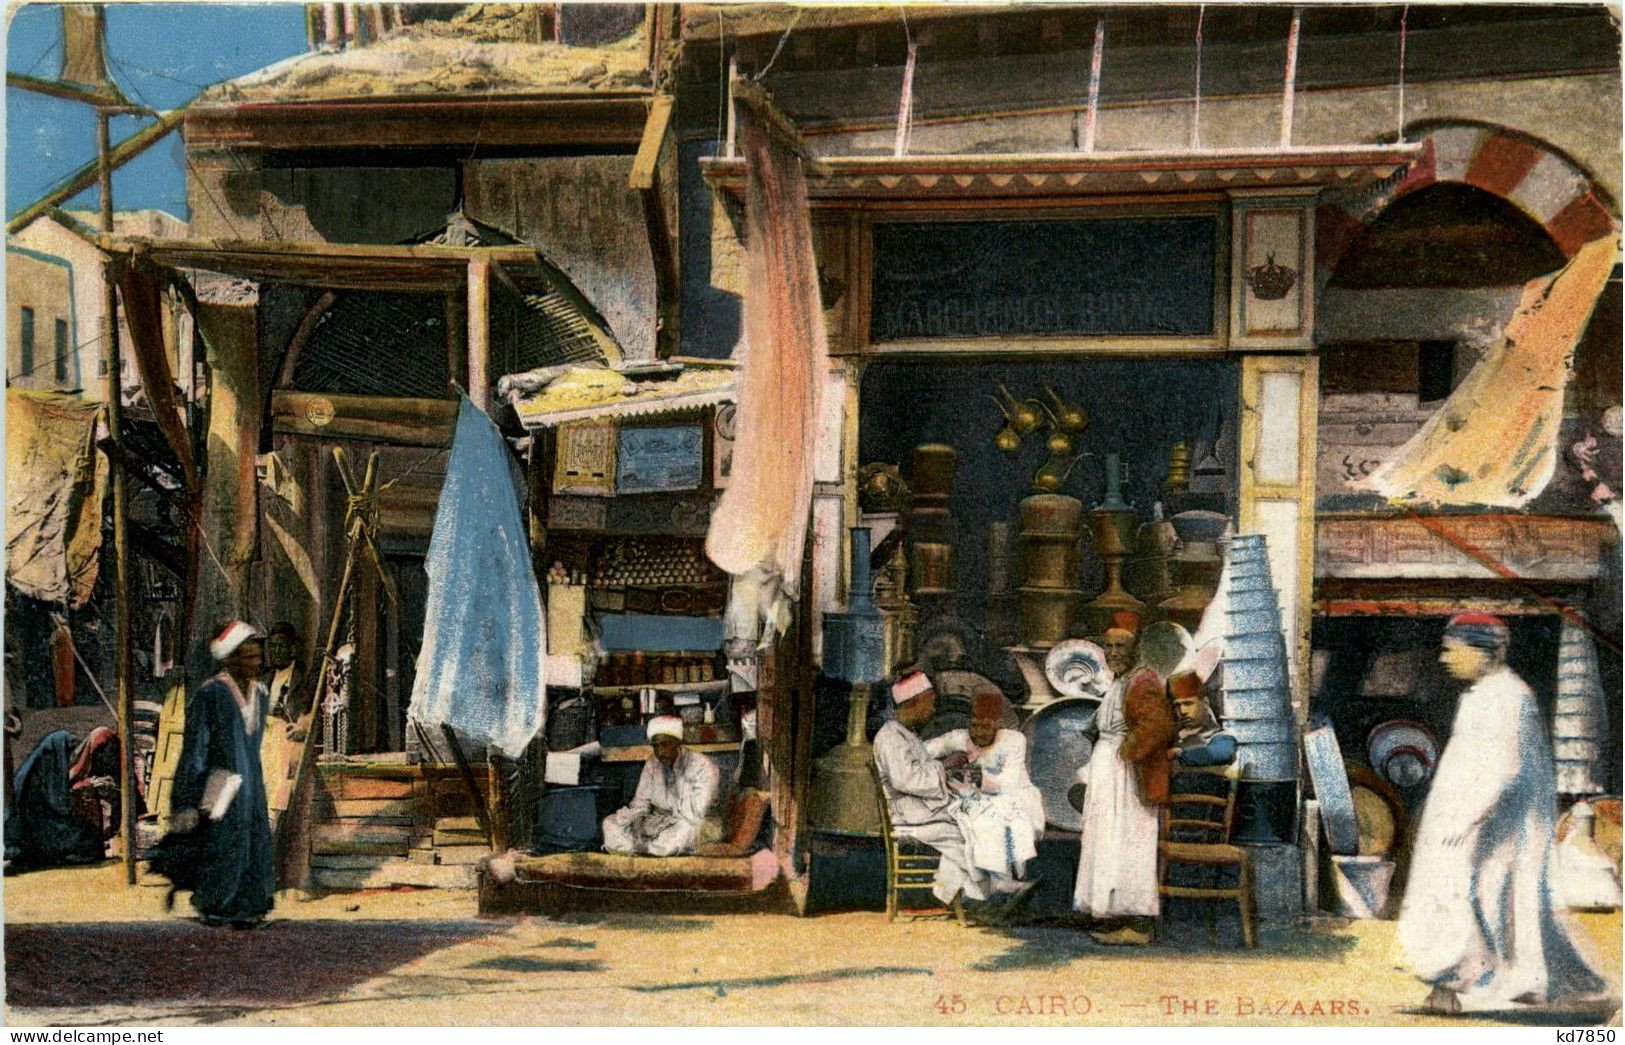 Cairo - The Bazaars - El Cairo